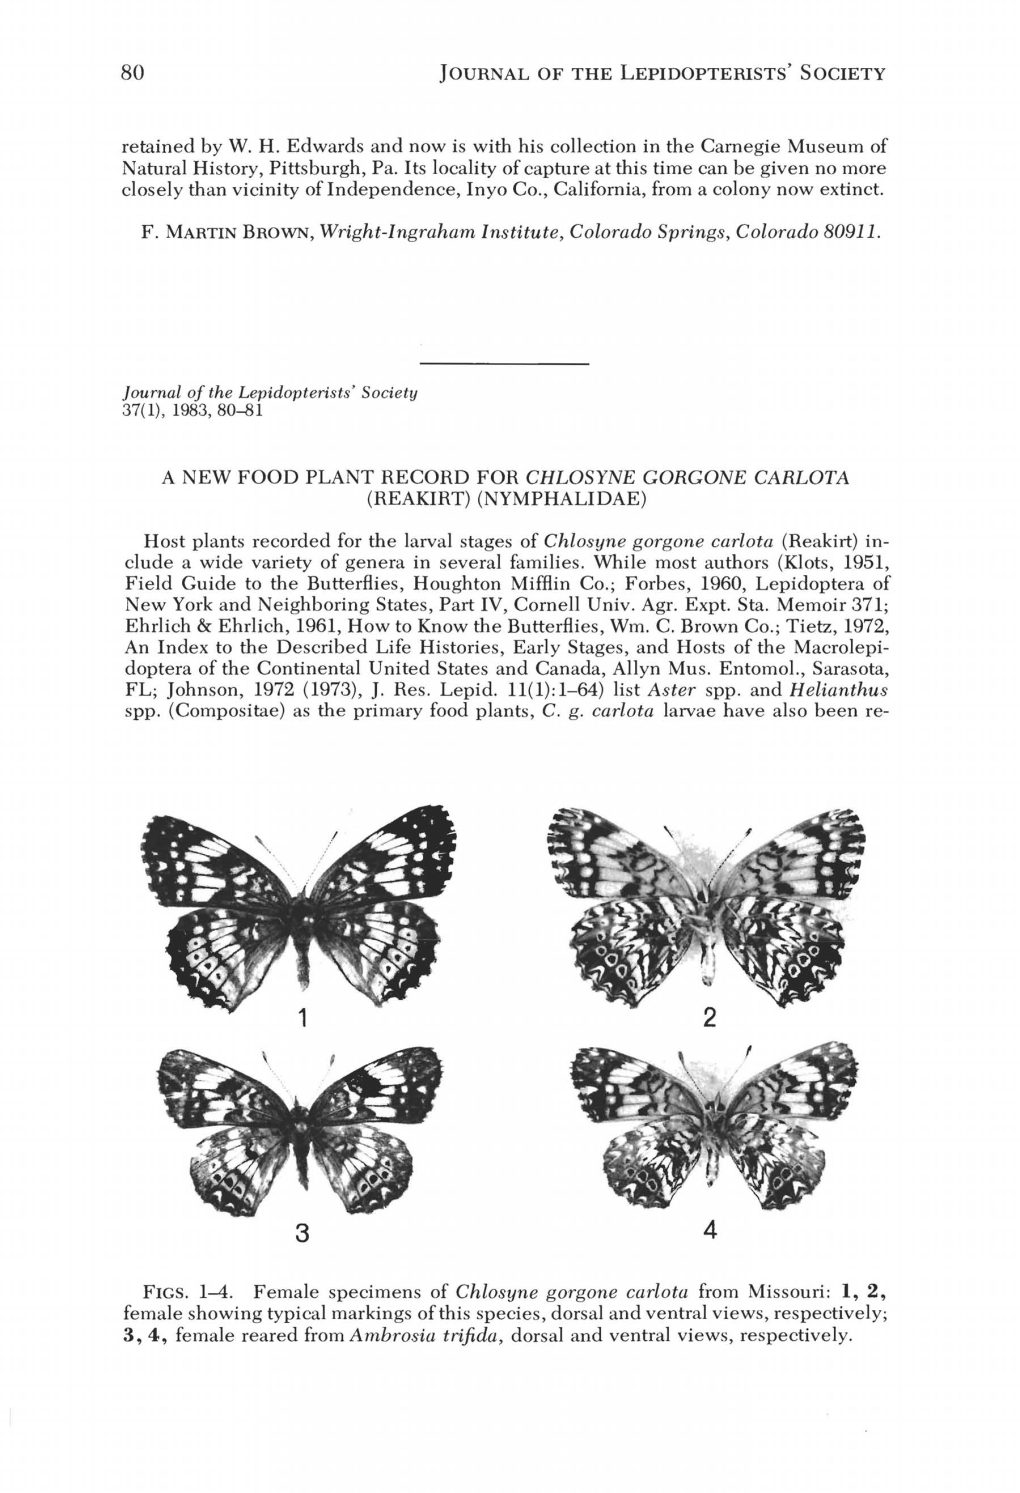 A New Food Plant Record for Chlosyne Gorgone Carlota (Reakirt) (Nymphalidae)